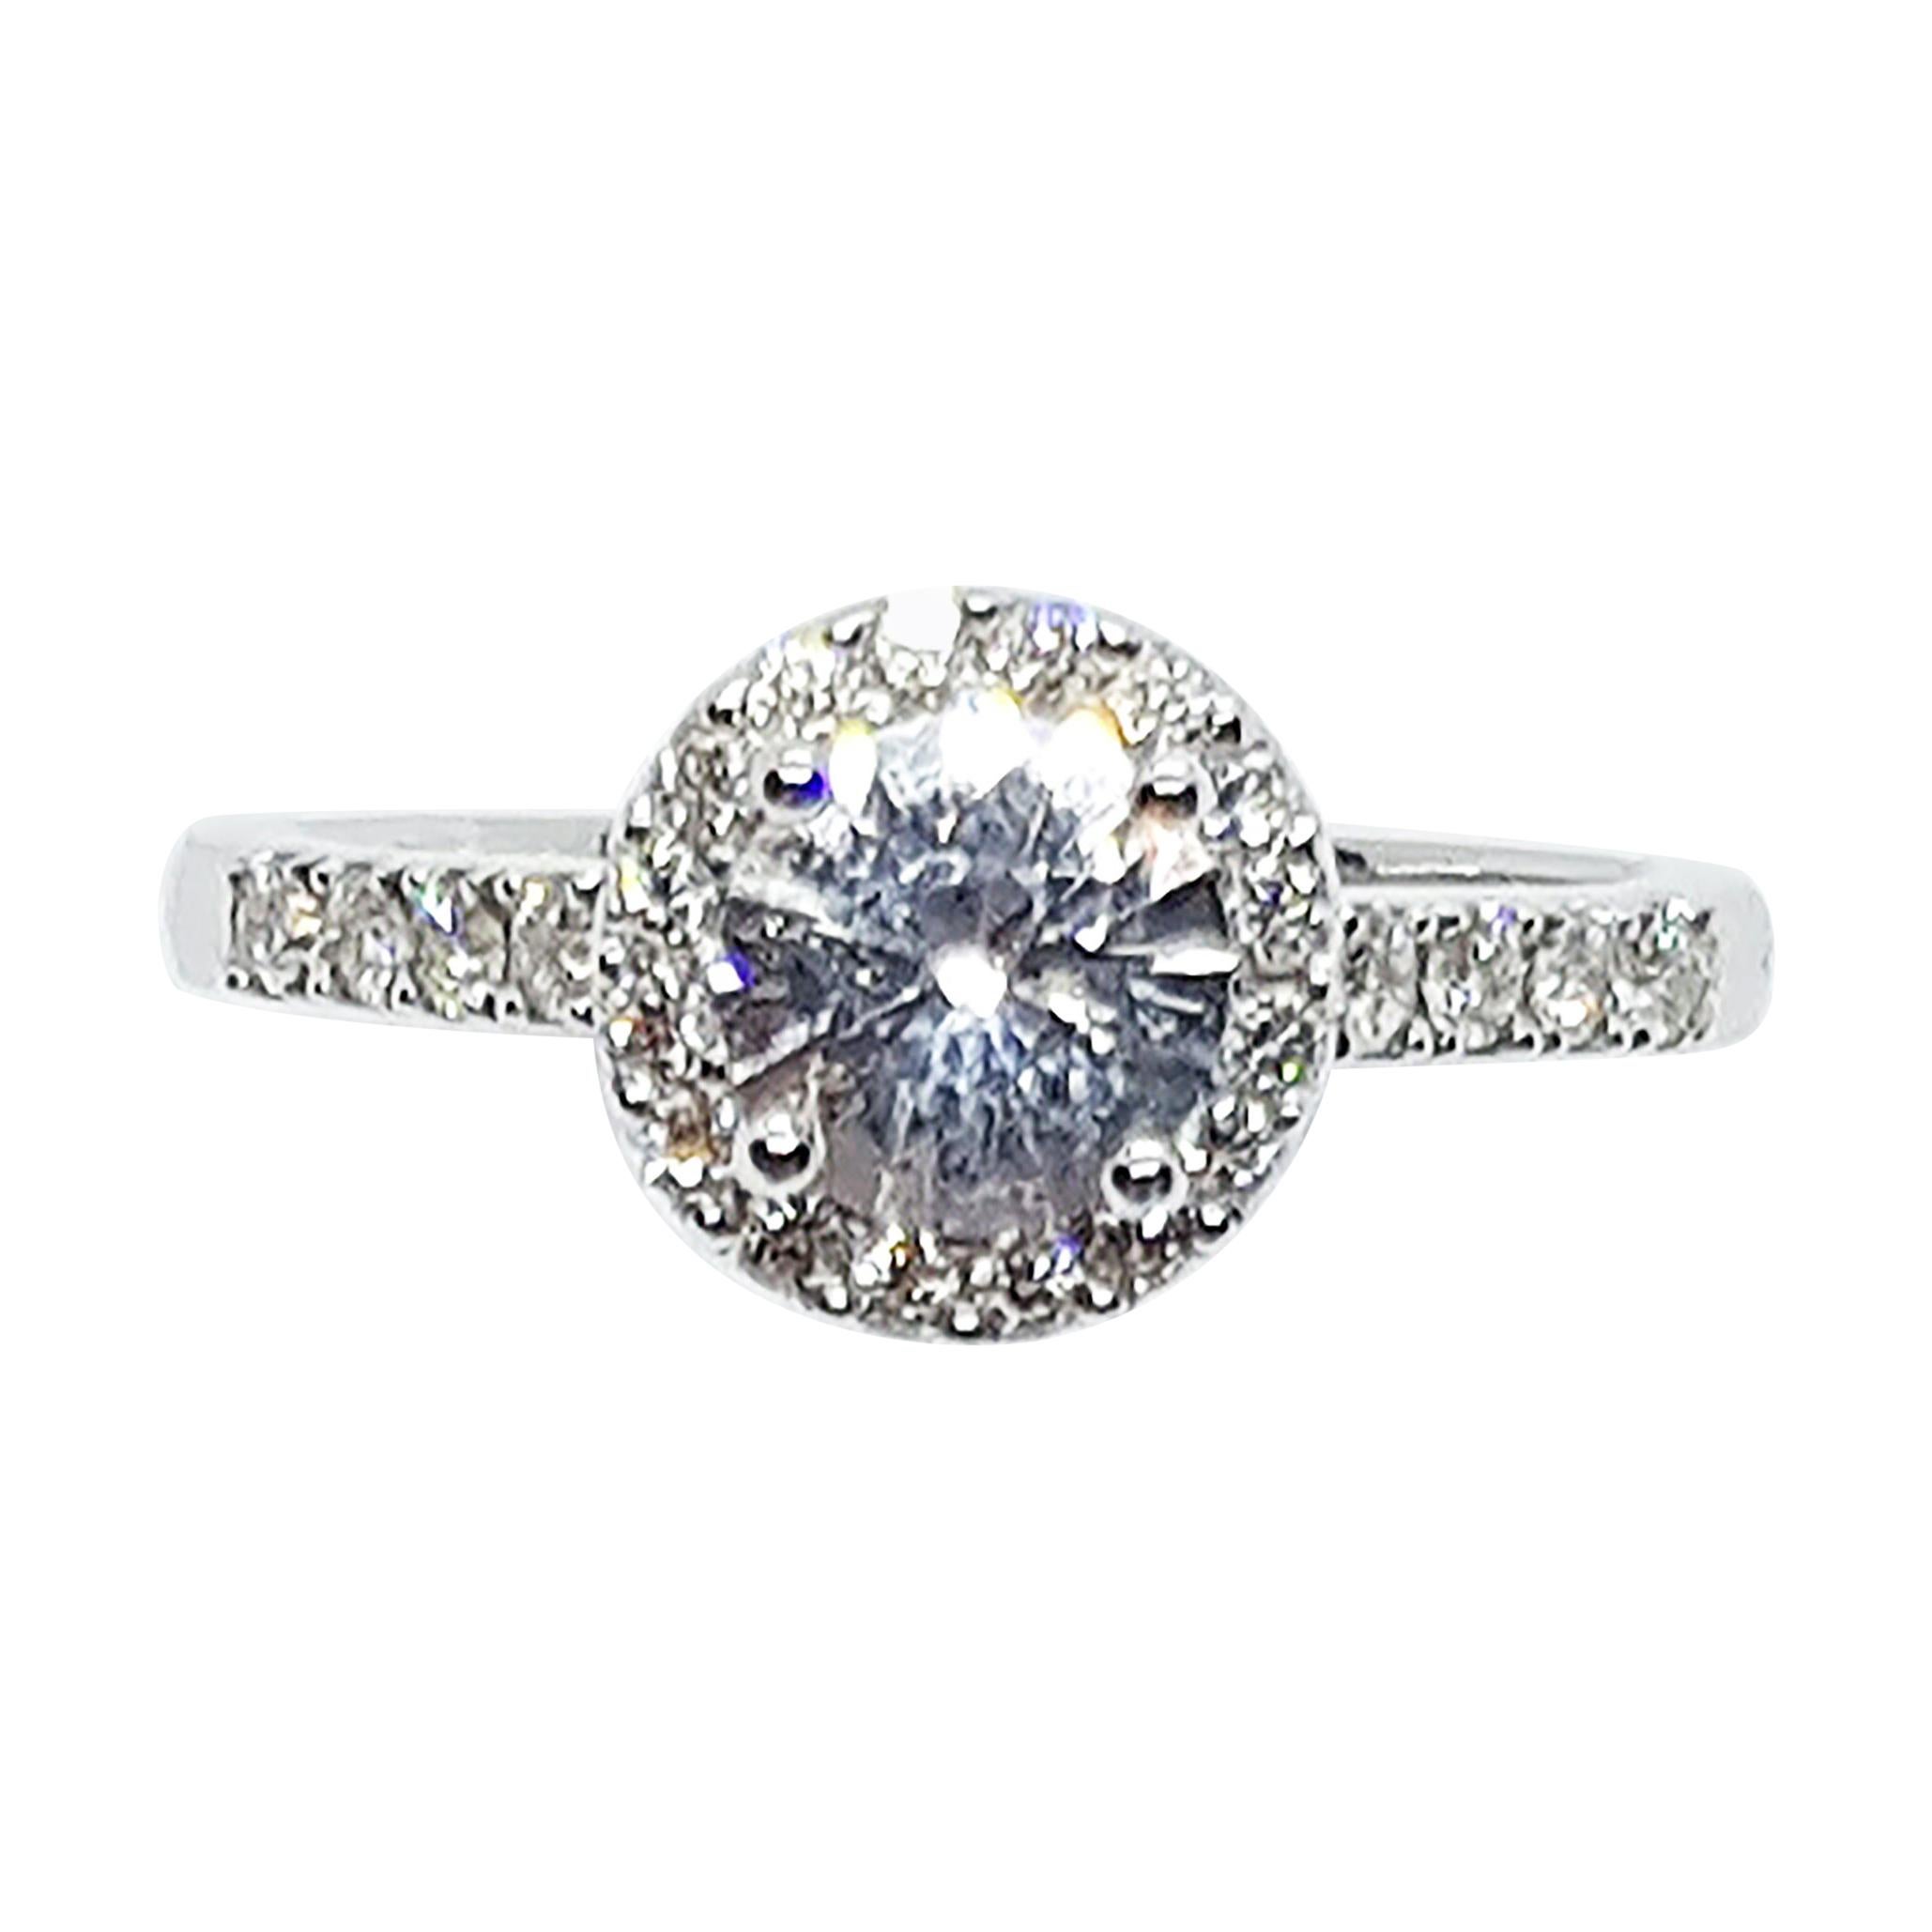 White Sapphire with Diamond Ring Set in 18 Karat White Gold Settings